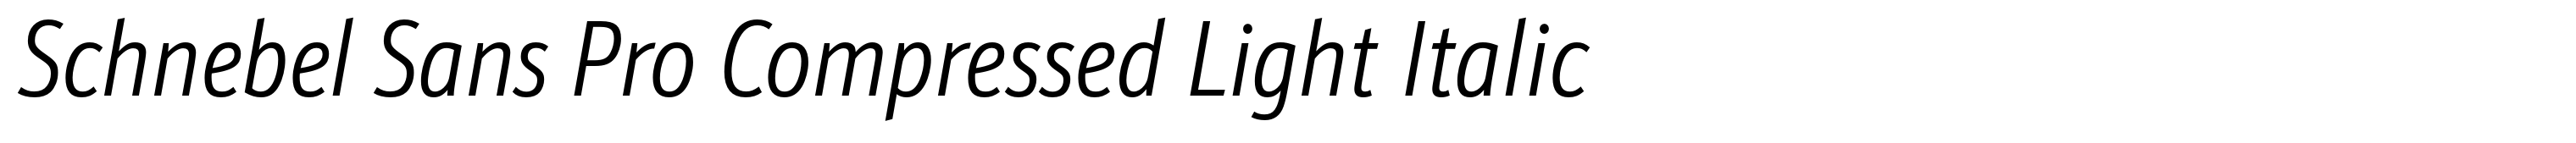 Schnebel Sans Pro Compressed Light Italic